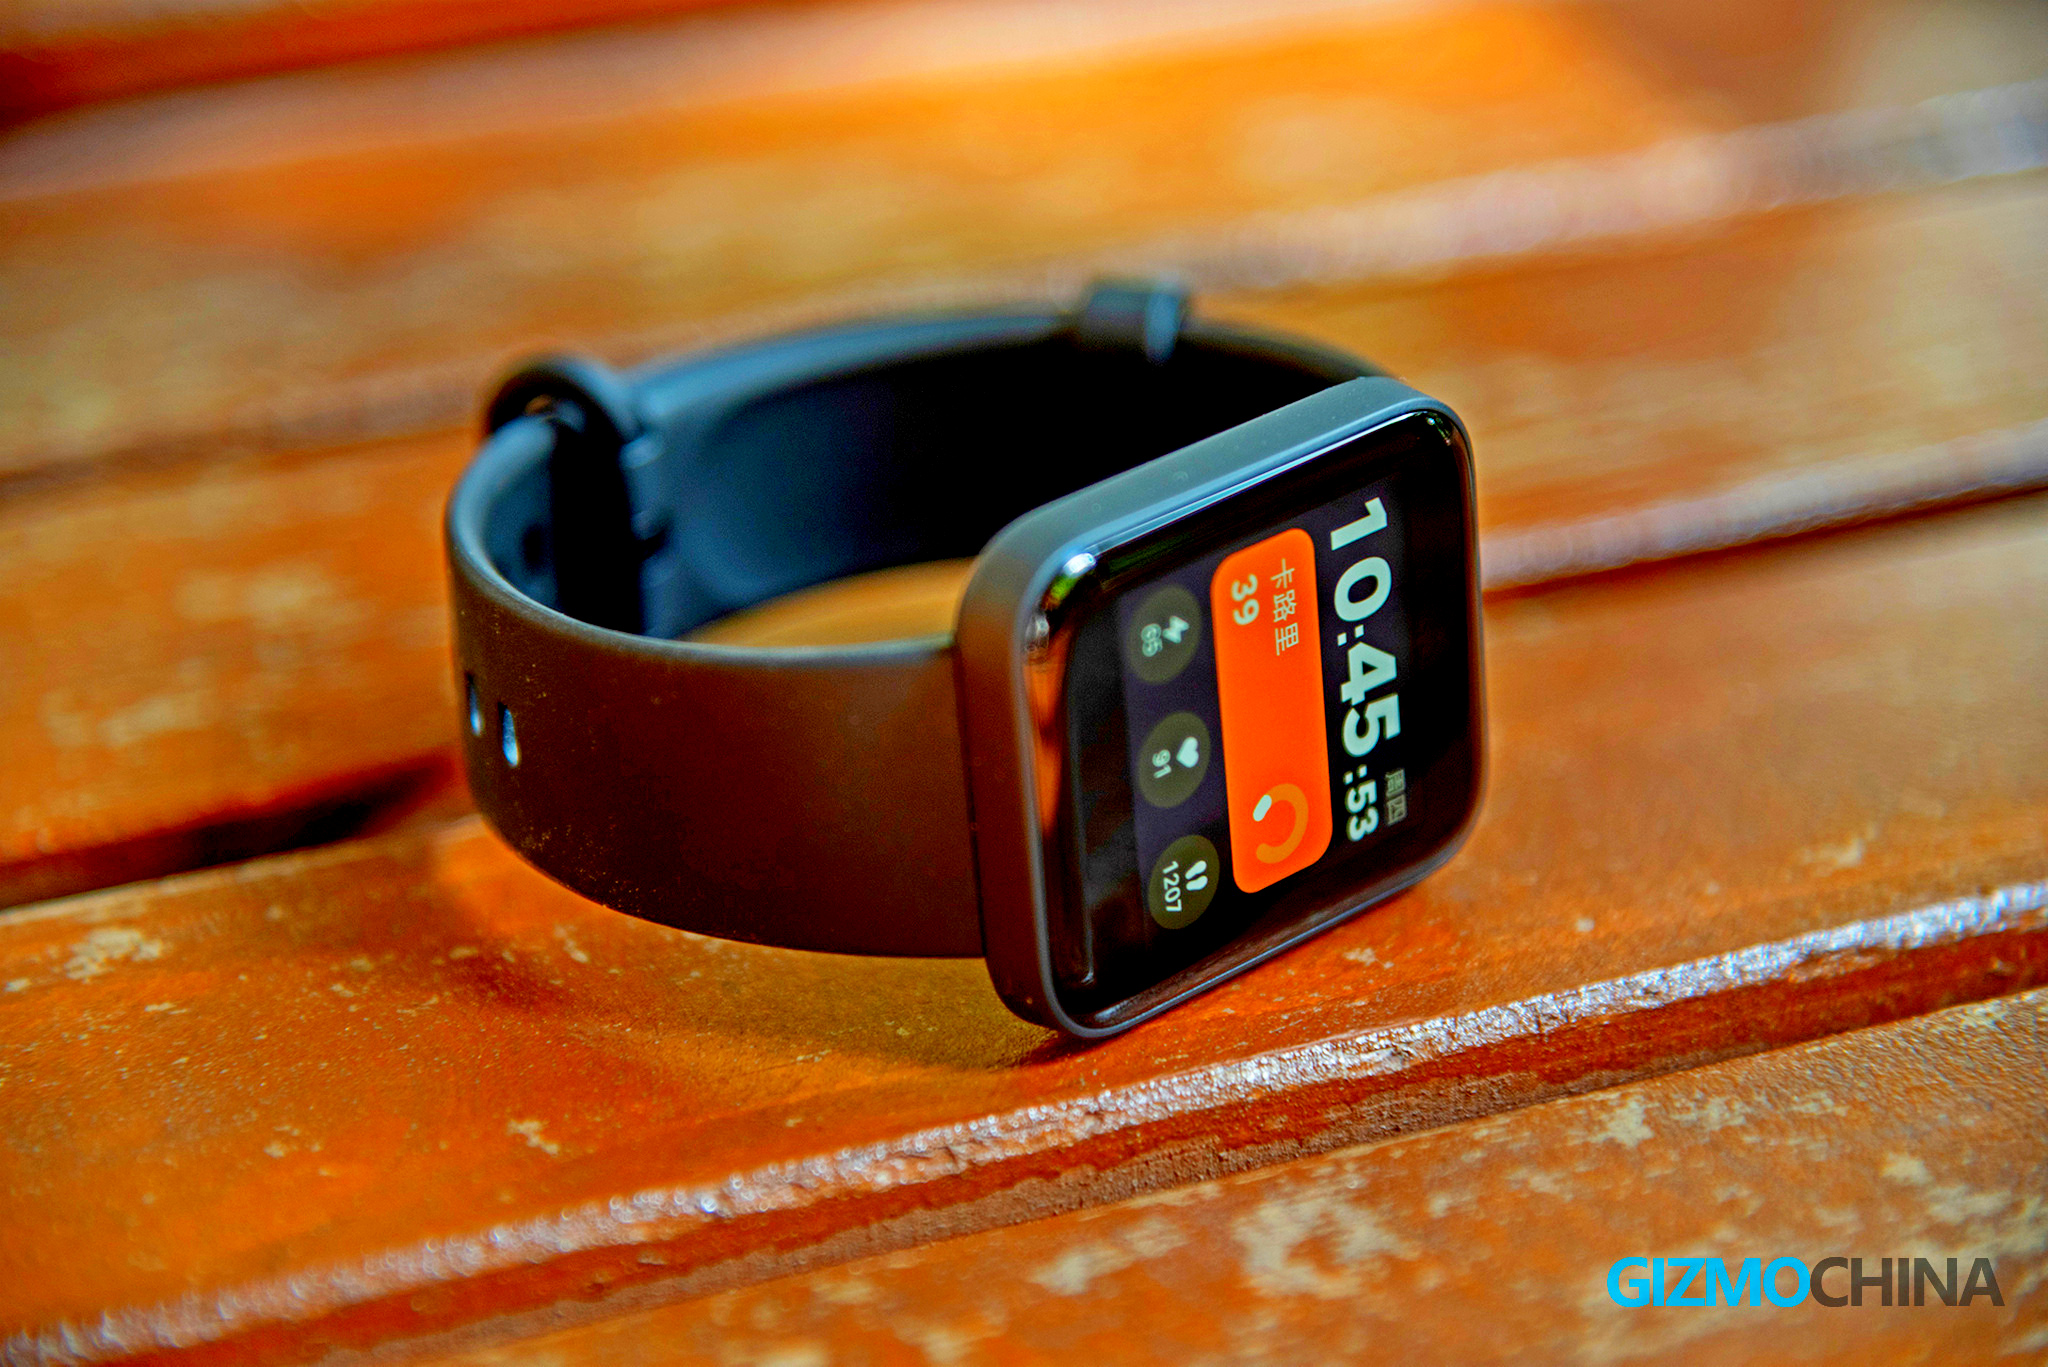 Redmi Watch hands-on: A solid Budget smartwatch with NFC - Gizmochina